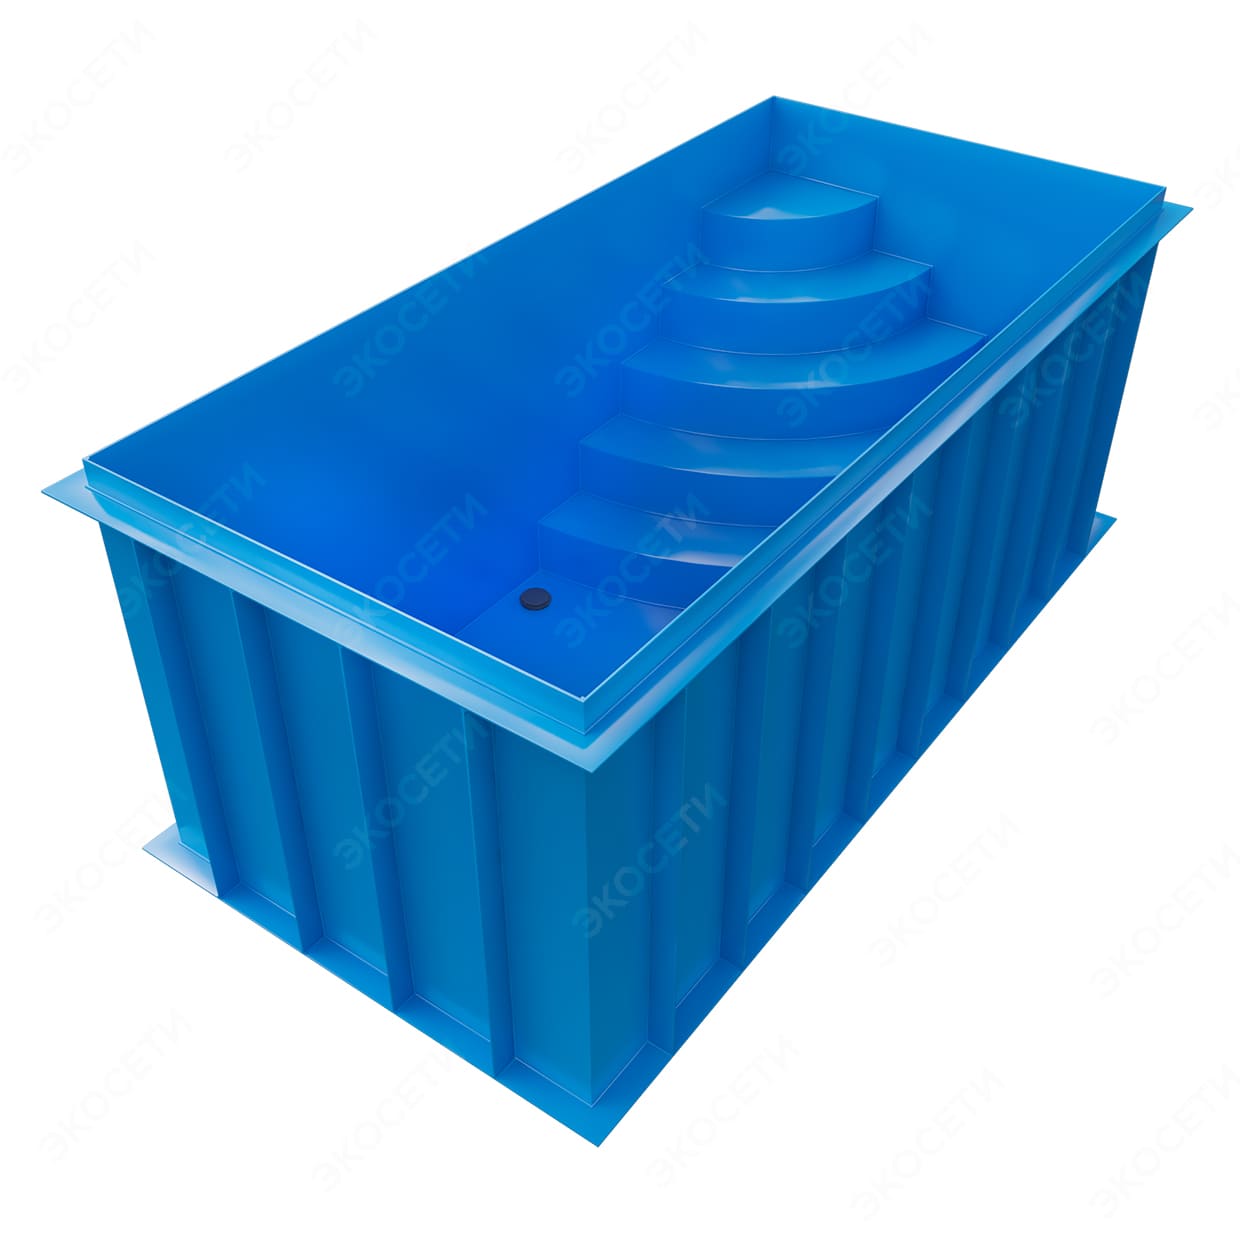 Прямоугольный пластиковый бассейн (3х2,4х1,5)